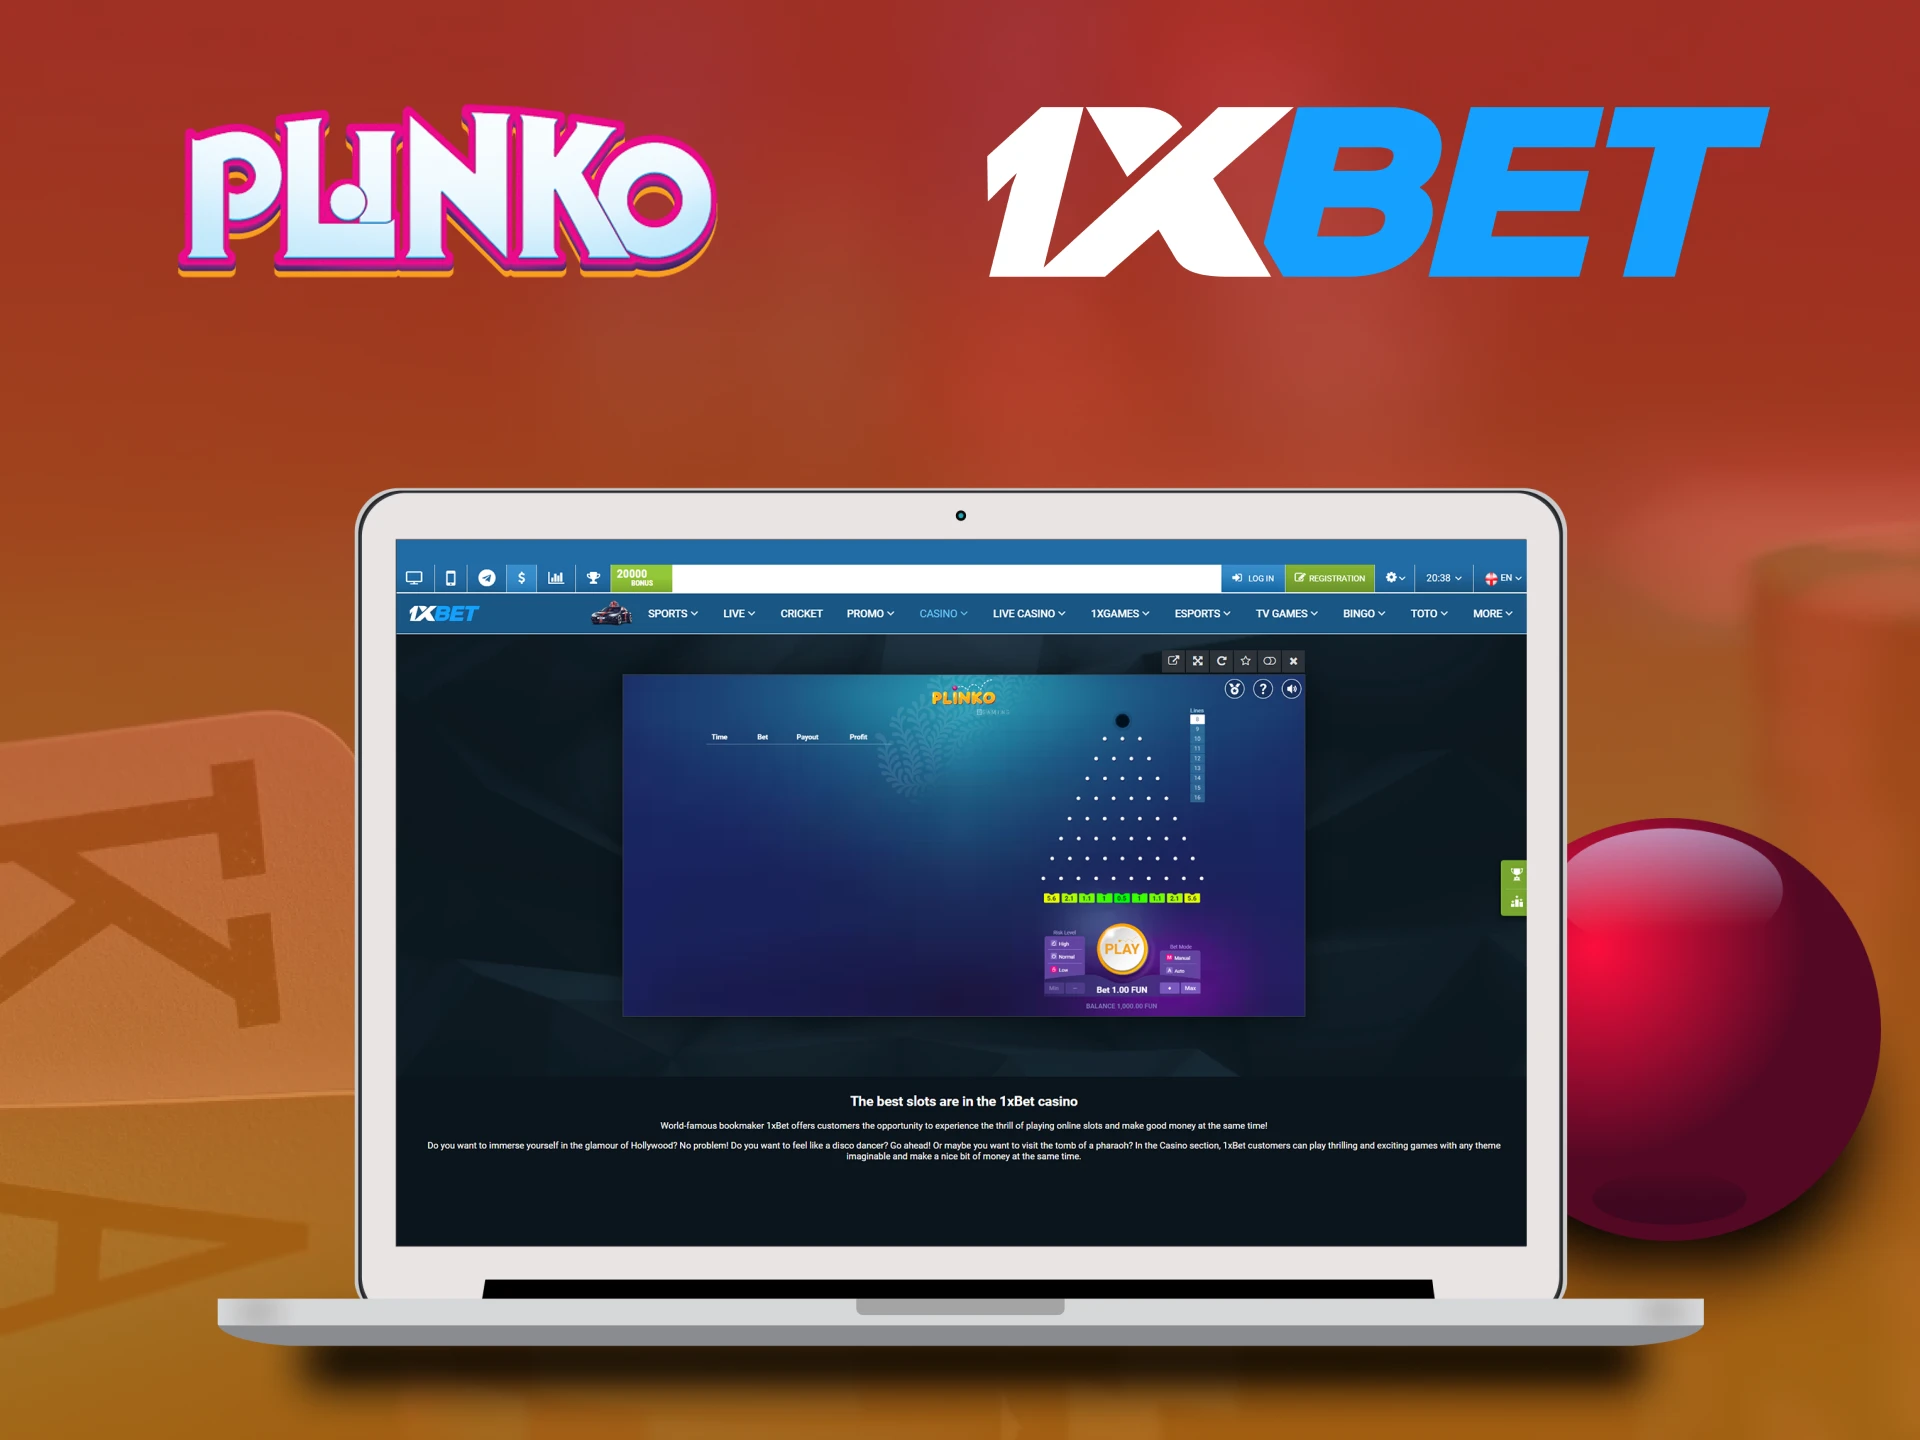 Play Plinko on the 1xbet website.